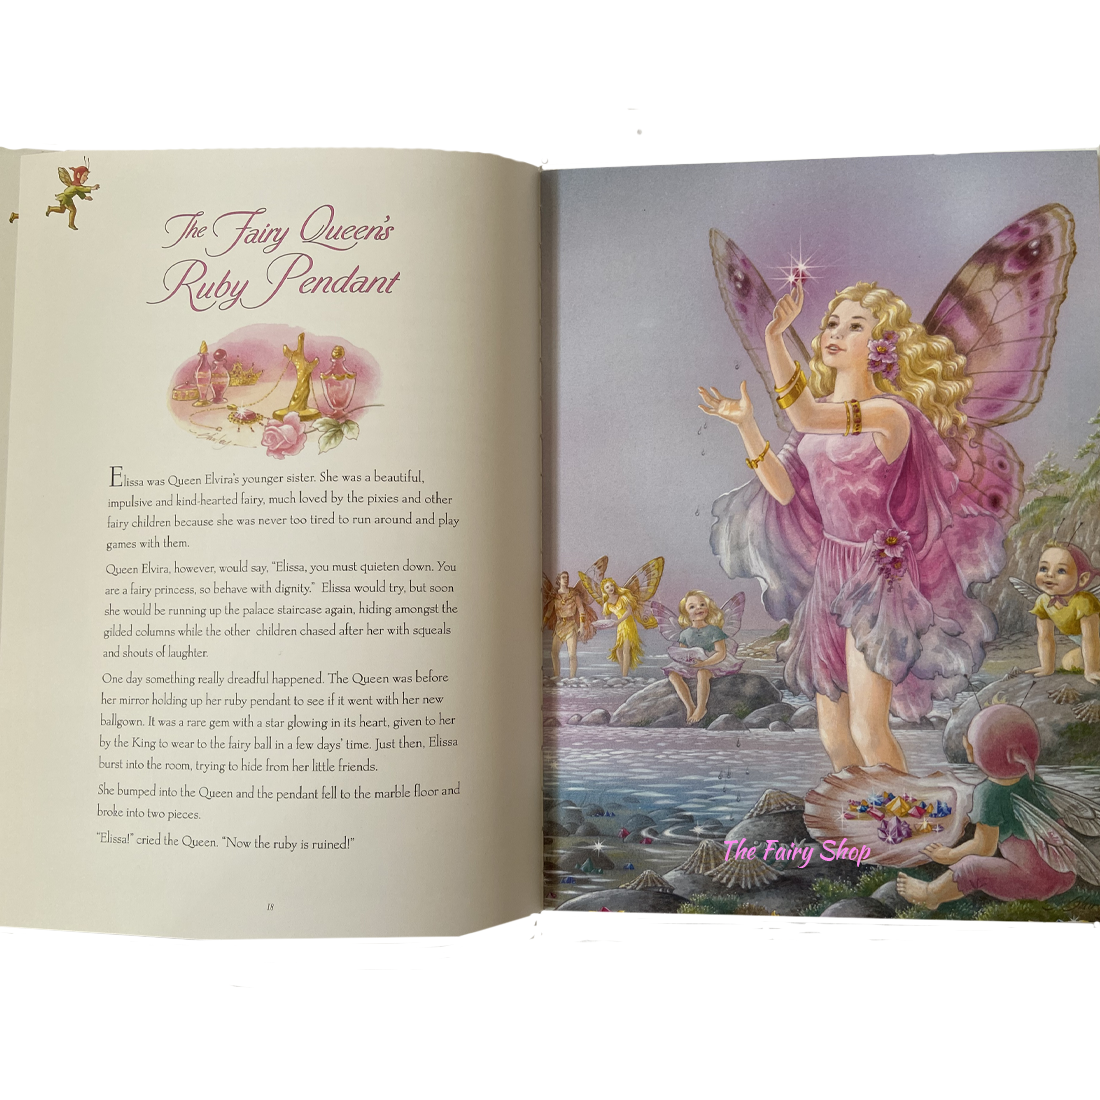 Fairytales Treasury Hardback Book (Lenticular Edition) by Shirley Barber